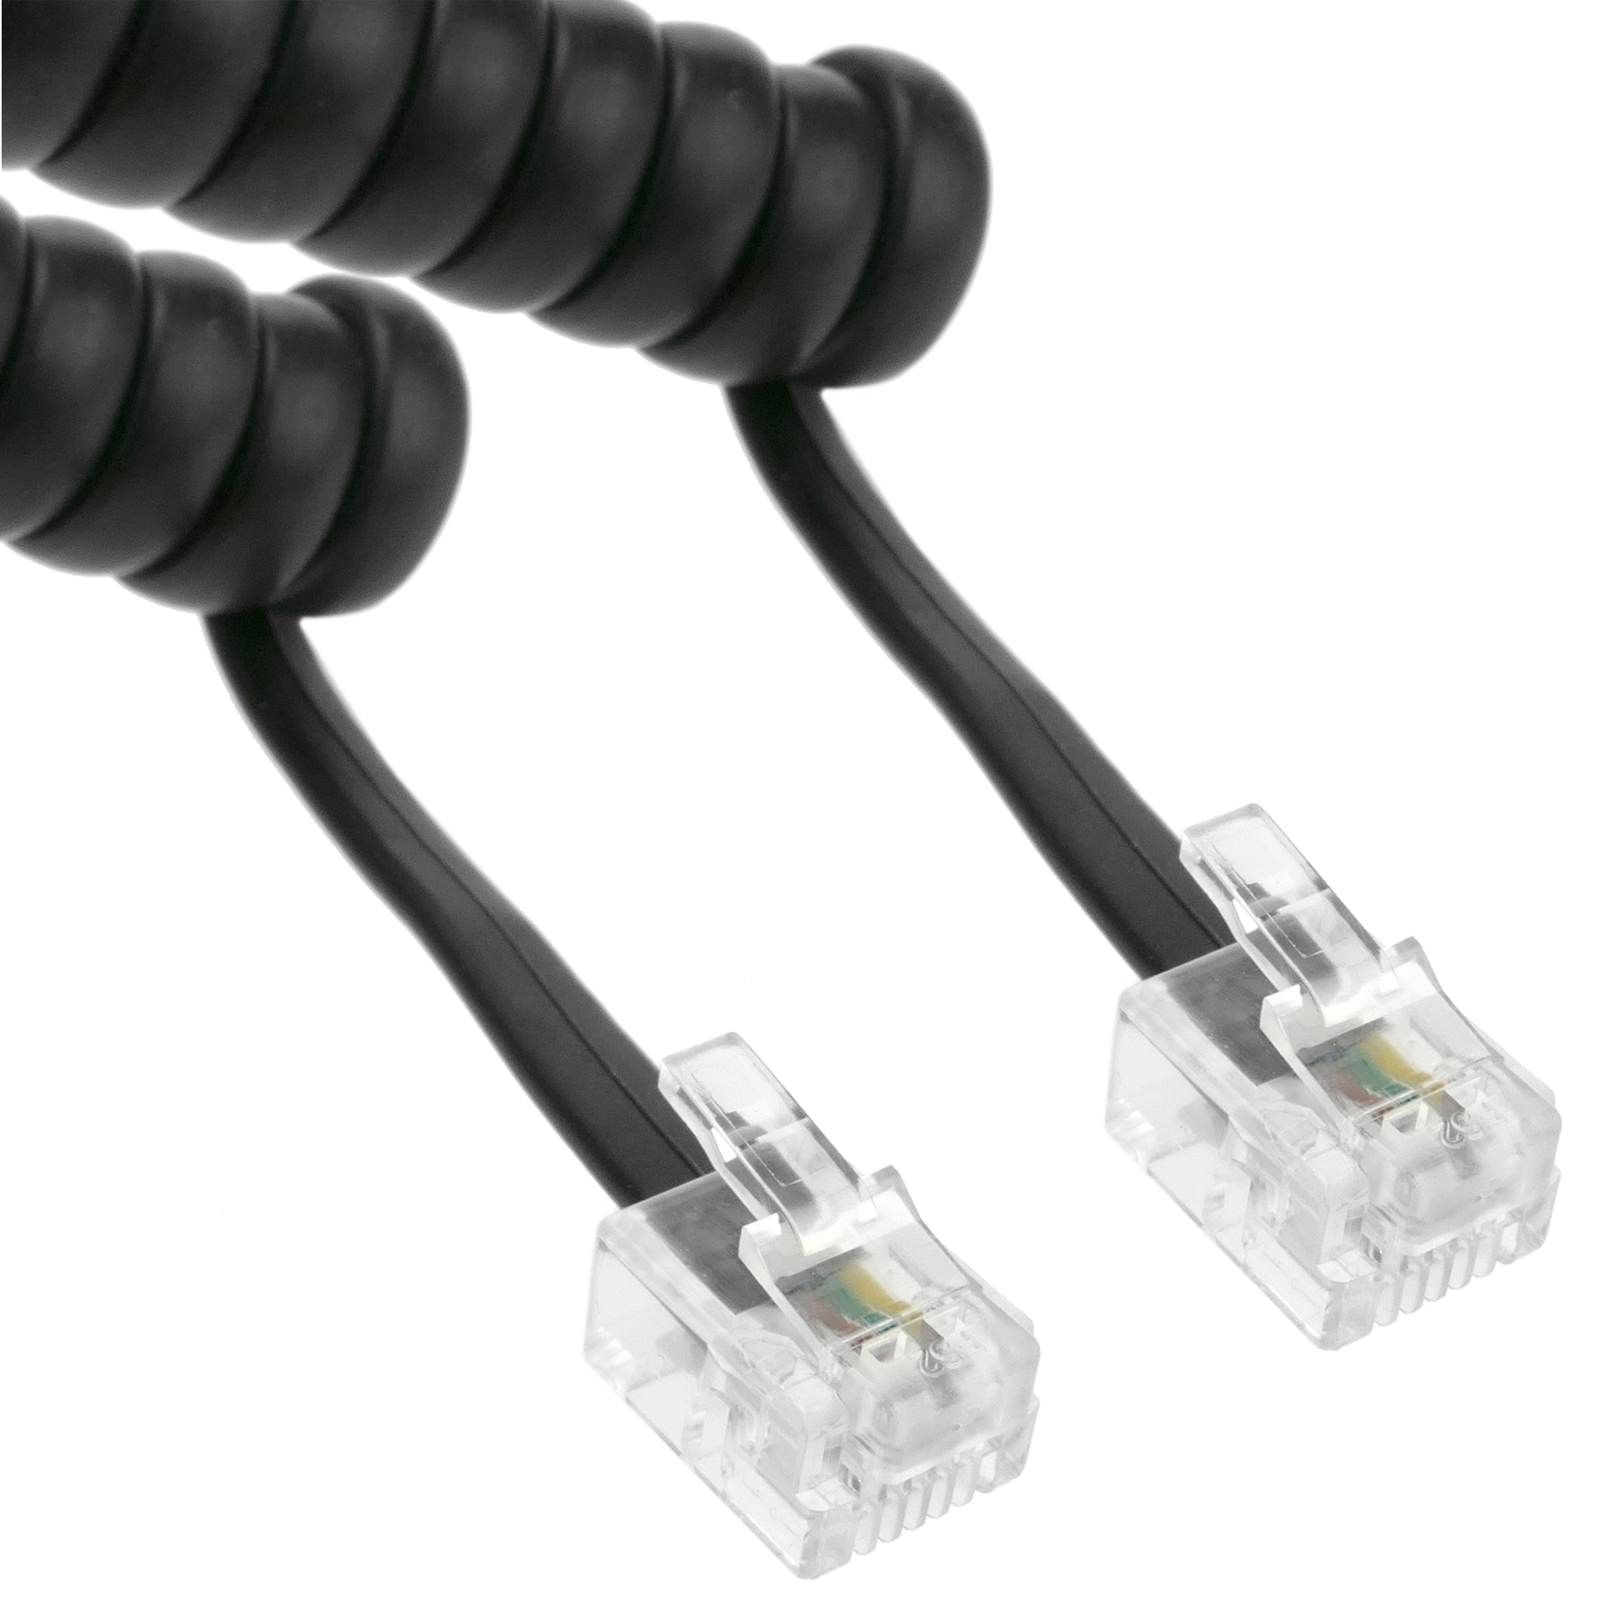 Cable de conexión de teléfono de 4 m con conectores